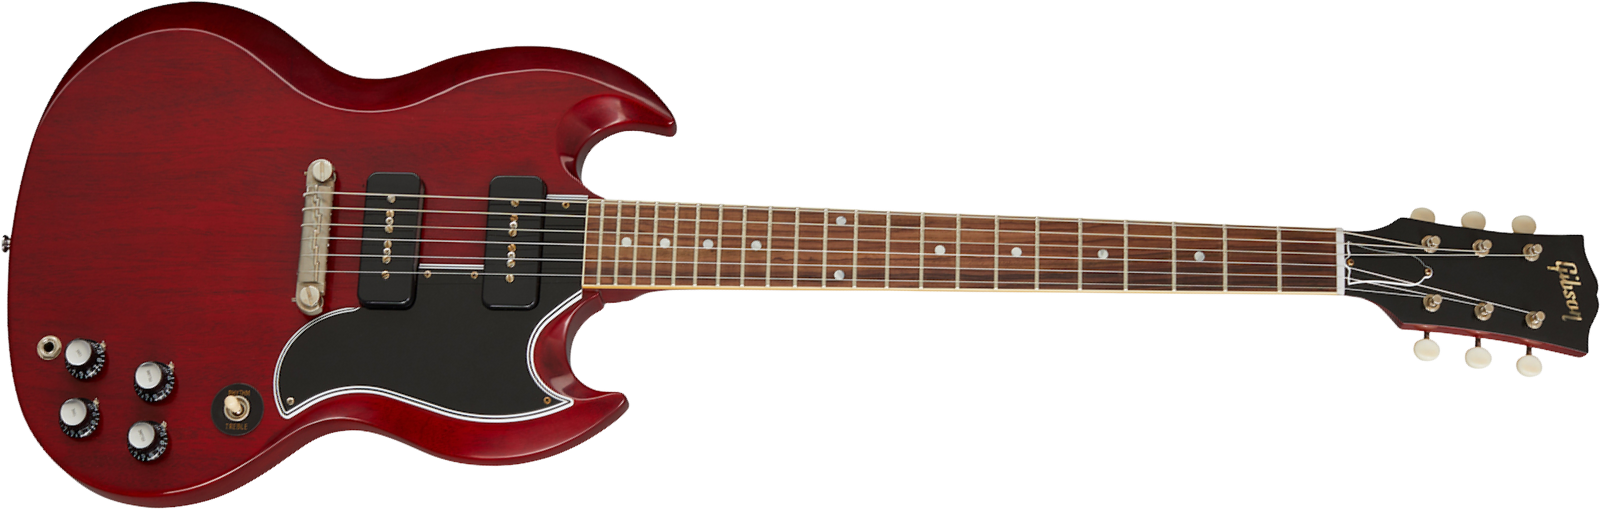 Gibson Custom Shop Sg Special 1963 Reissue 2p90 Ht Rw - Vos Cherry Red - Guitare Électrique Double Cut - Main picture